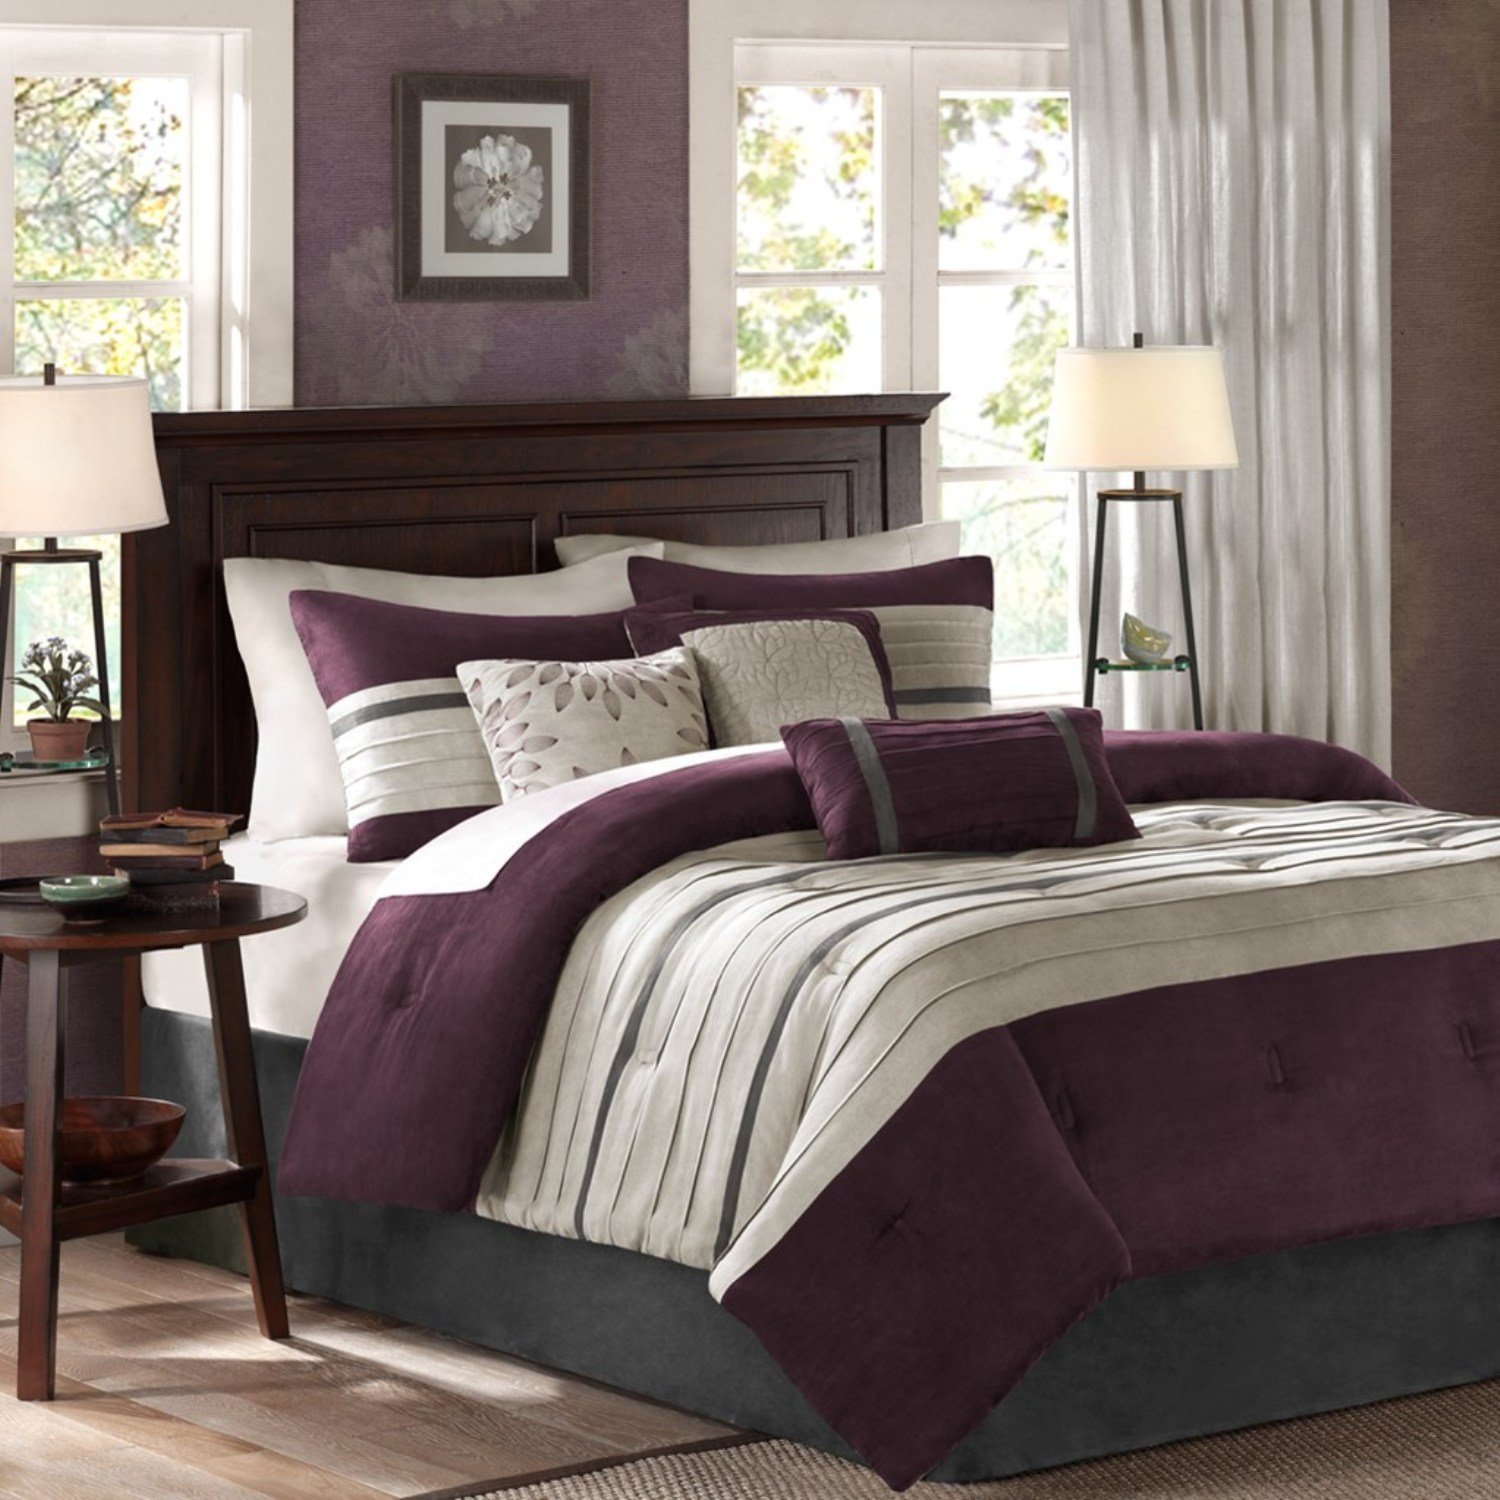  Grey  and Purple Comforter  Bedding  Sets